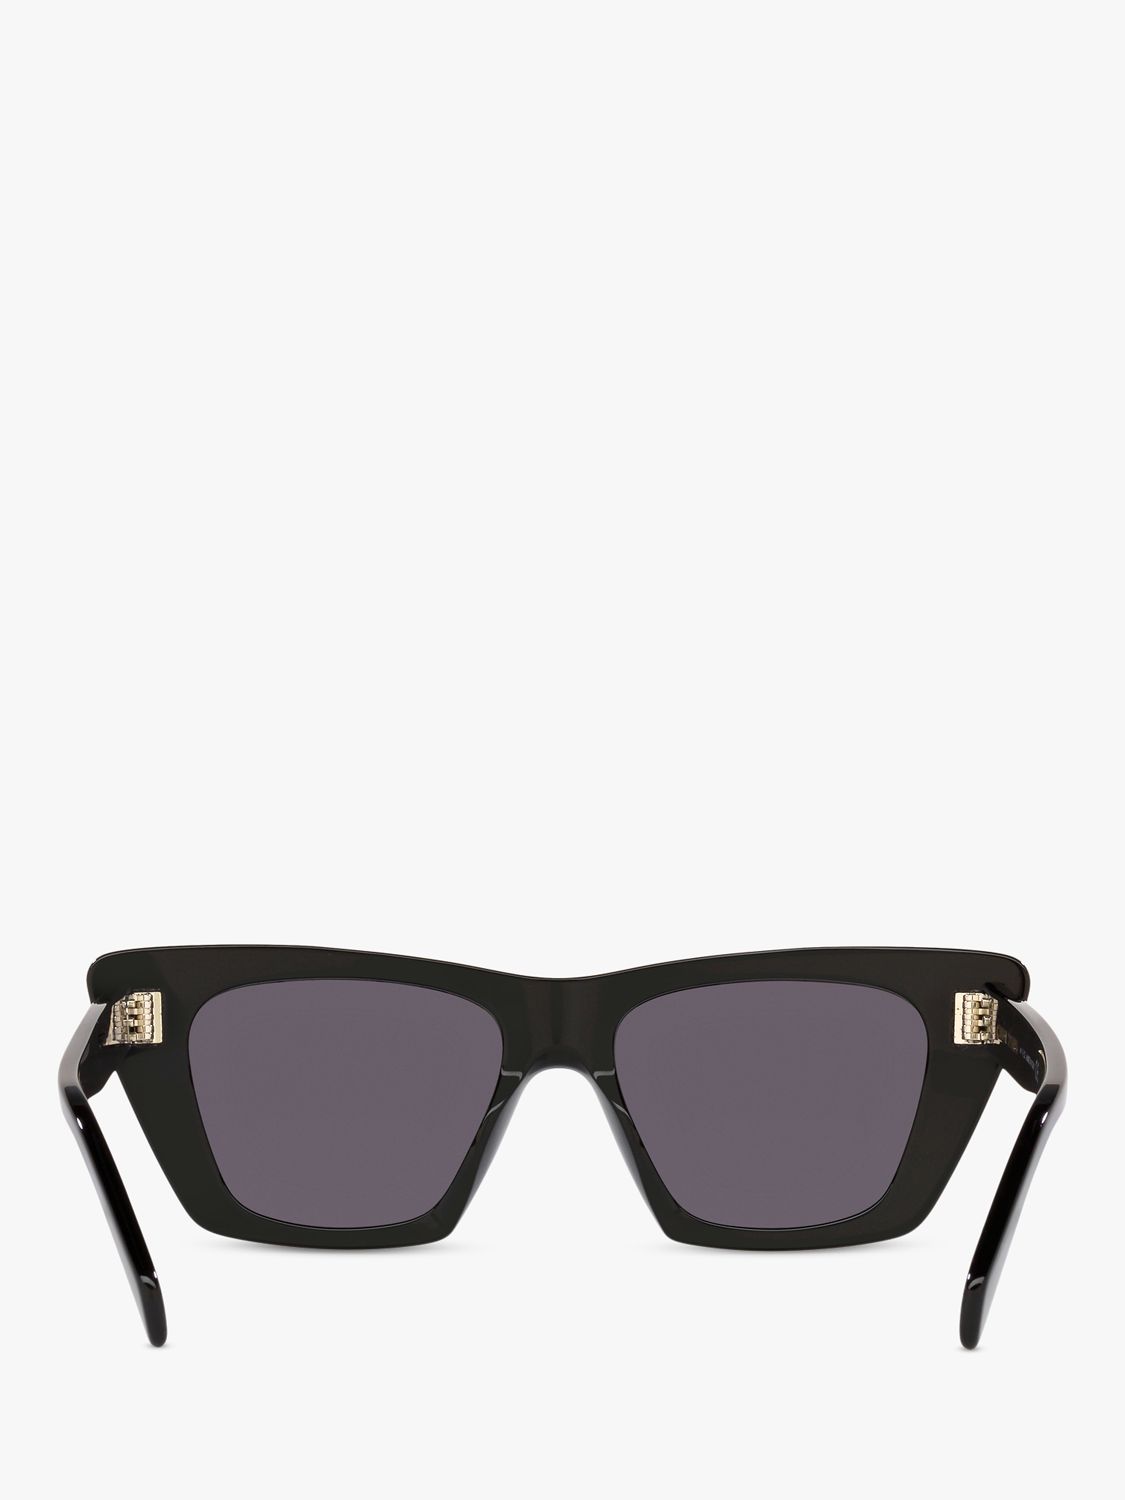 Celine CL40187I Women's Cat's Eye Sunglasses, Black/Grey